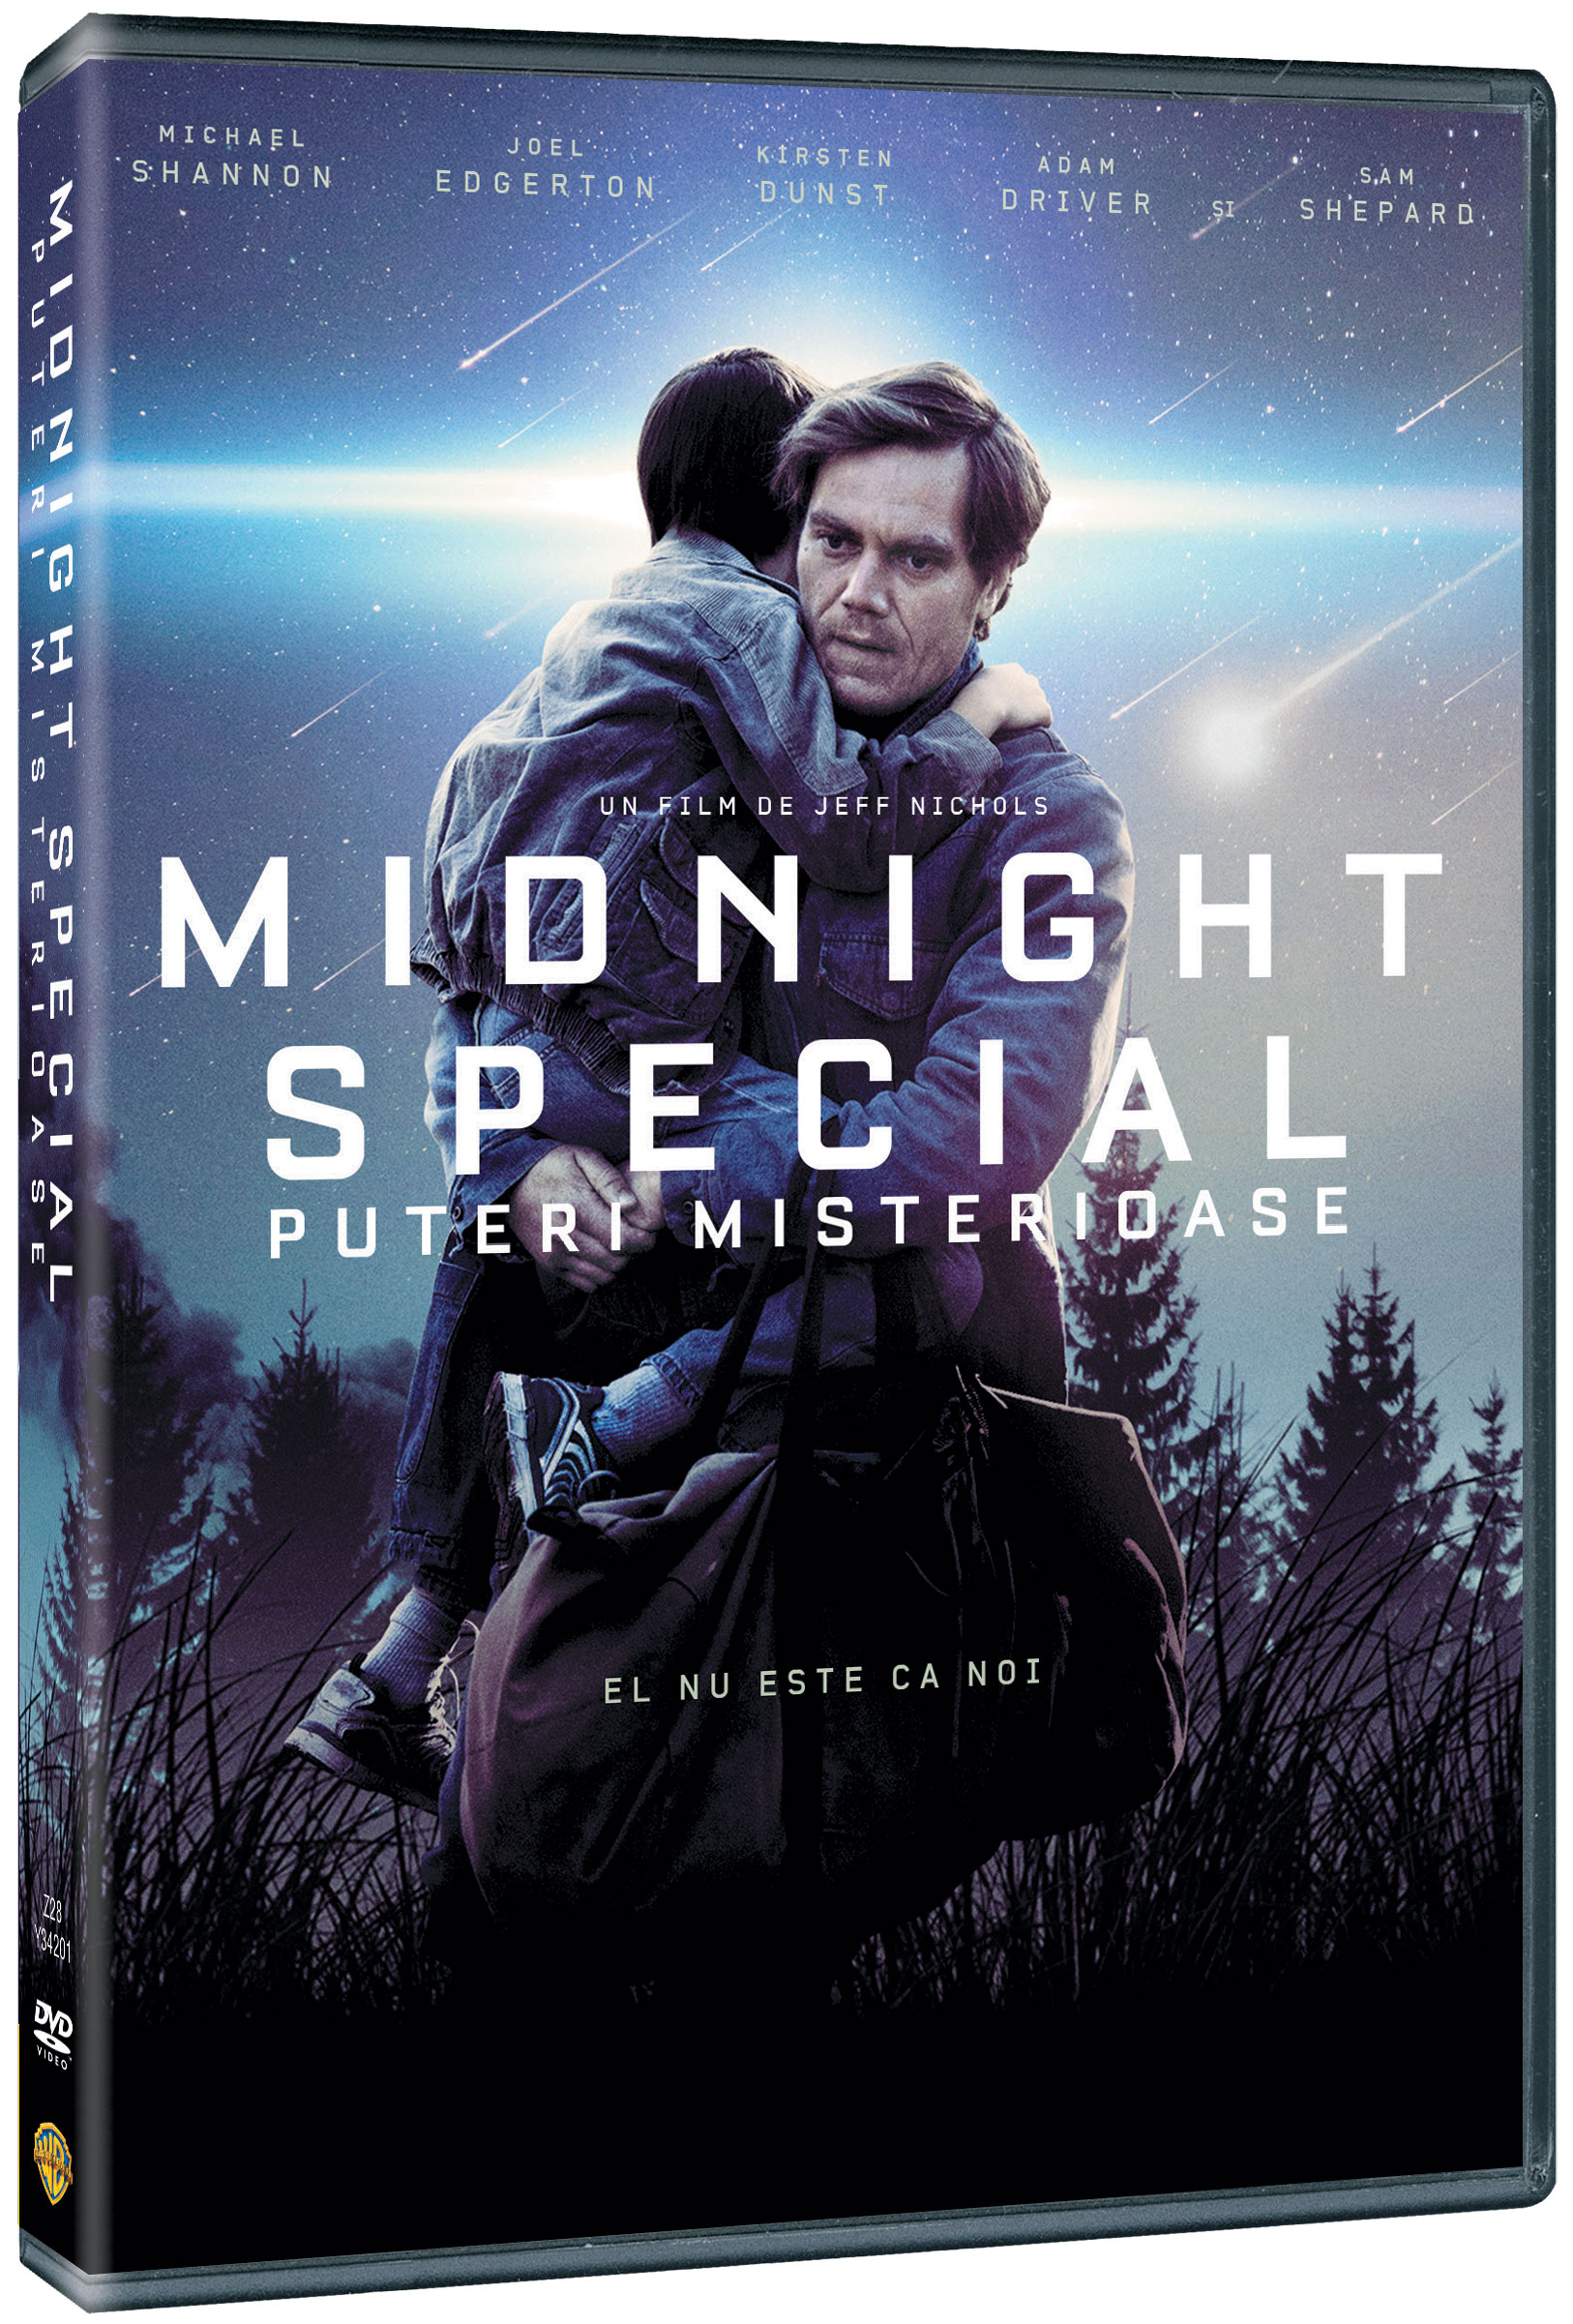 DVD Midnight Special - Puteri Misterioase